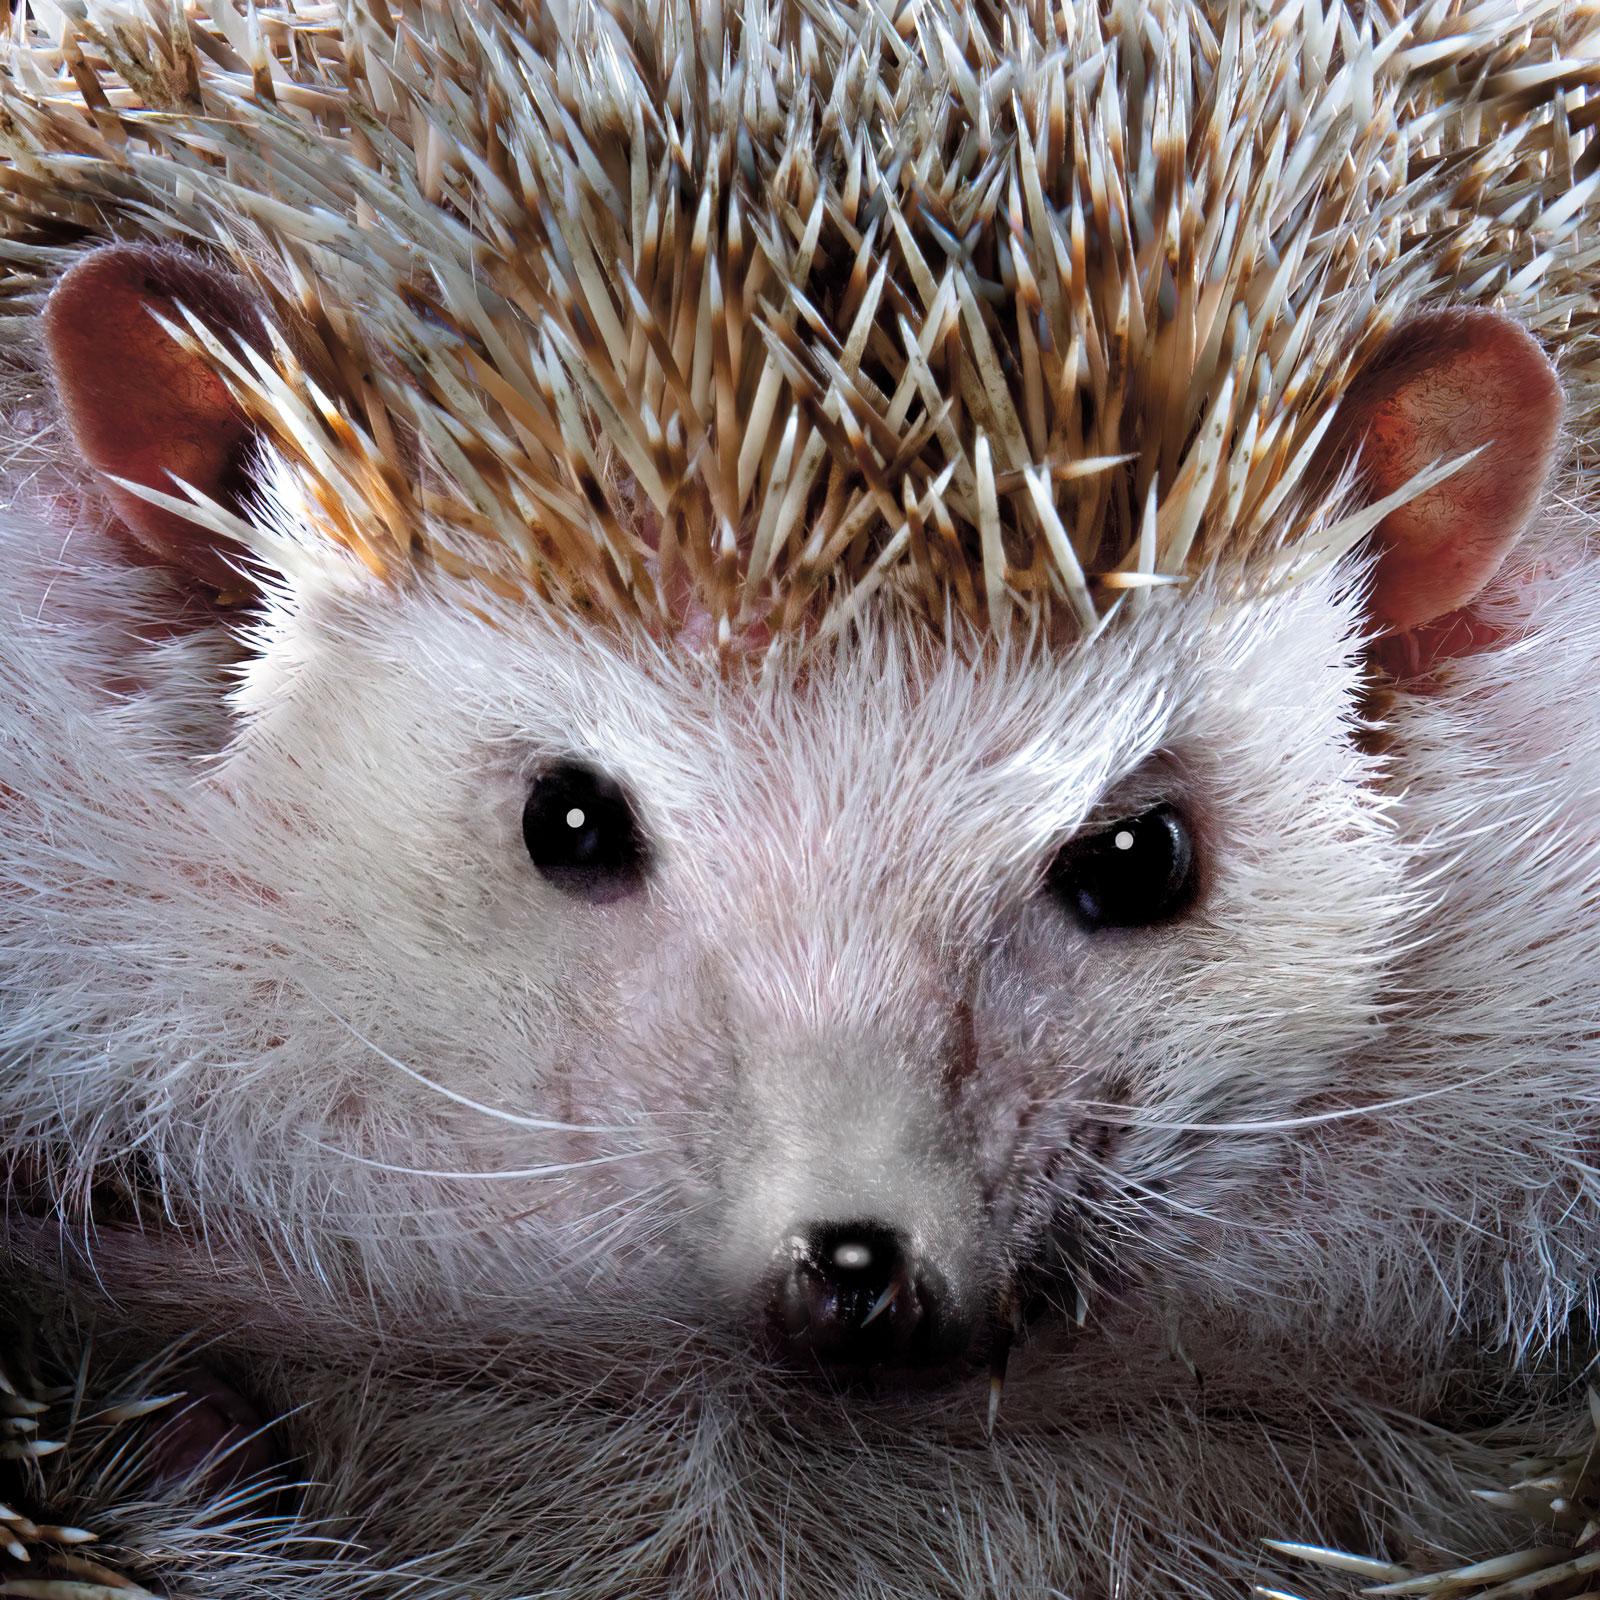 Hedgehog #1 - Signed limited edition wildlife fine art, Contemporary square - Photograph by Tim Platt